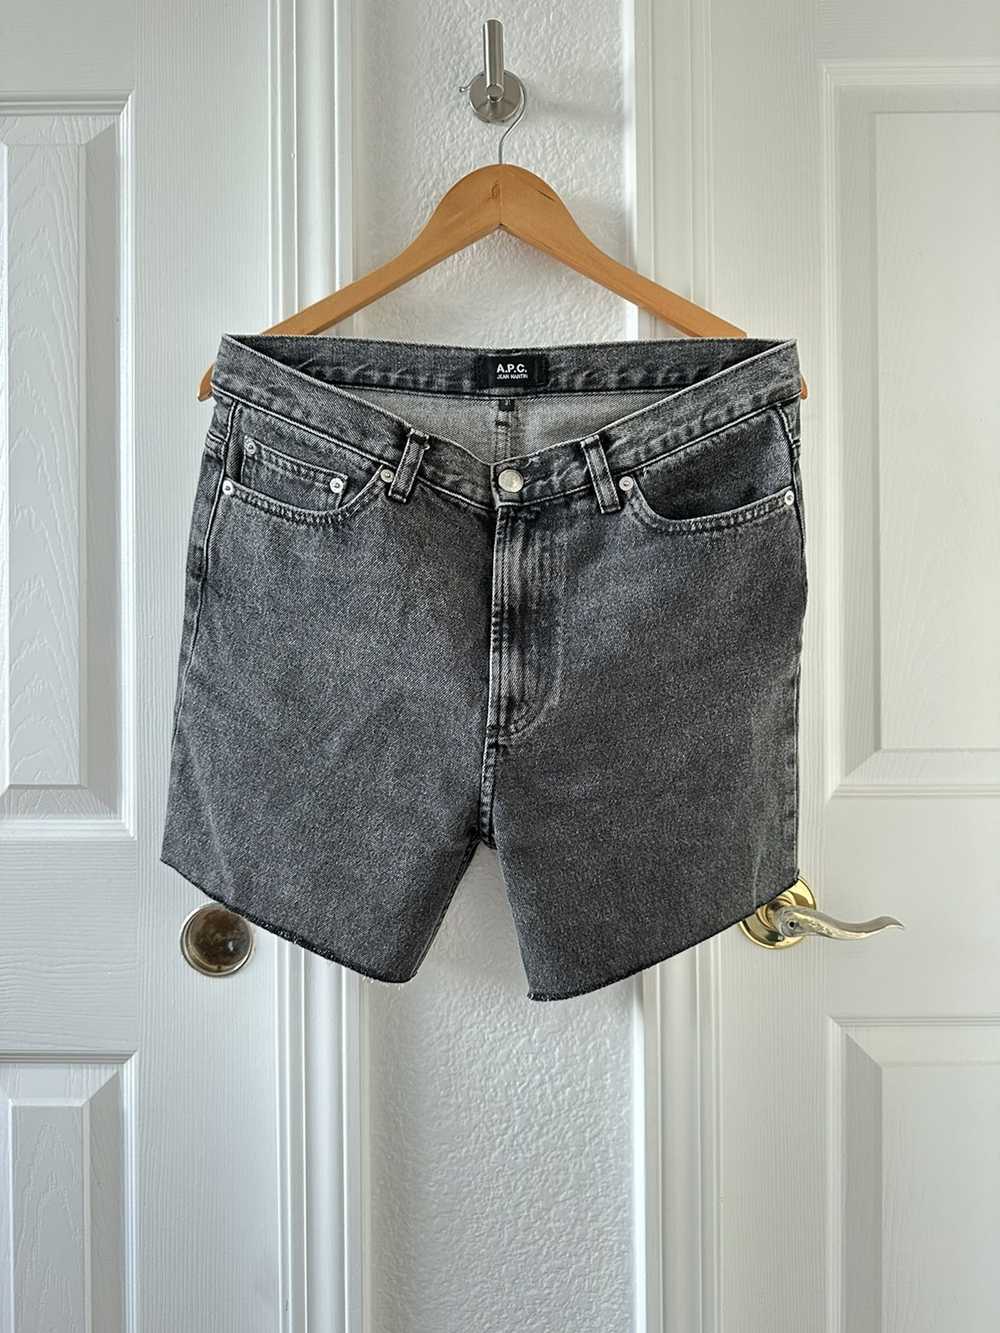 A.P.C. Gray Washed Denim Shorts - image 1